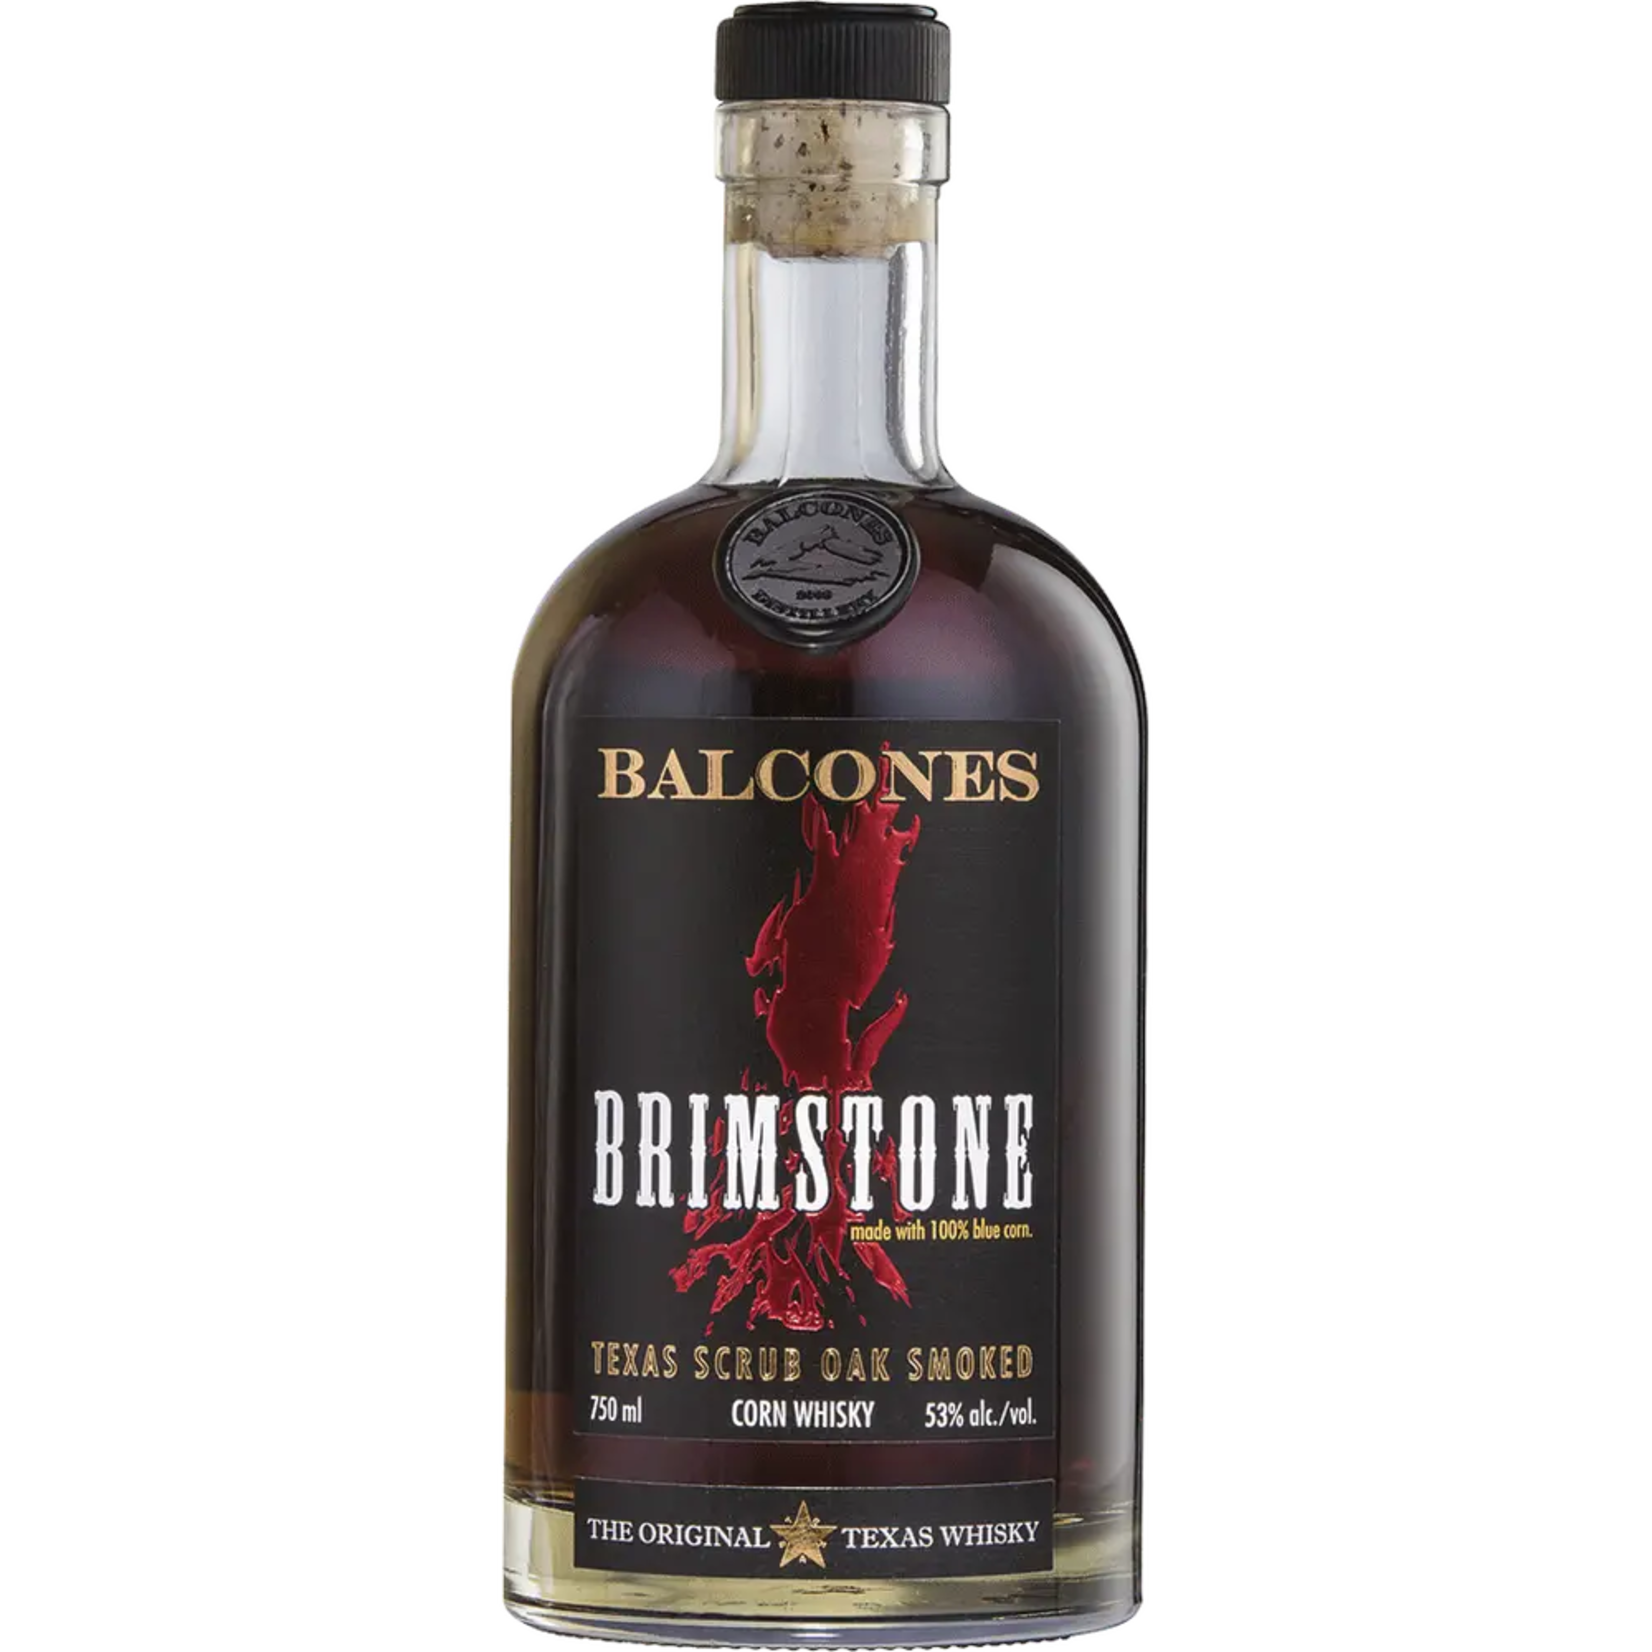 Balcones Corn Whisky Brimstone Texas Scrub Oak Smoked 106Proof 750ml